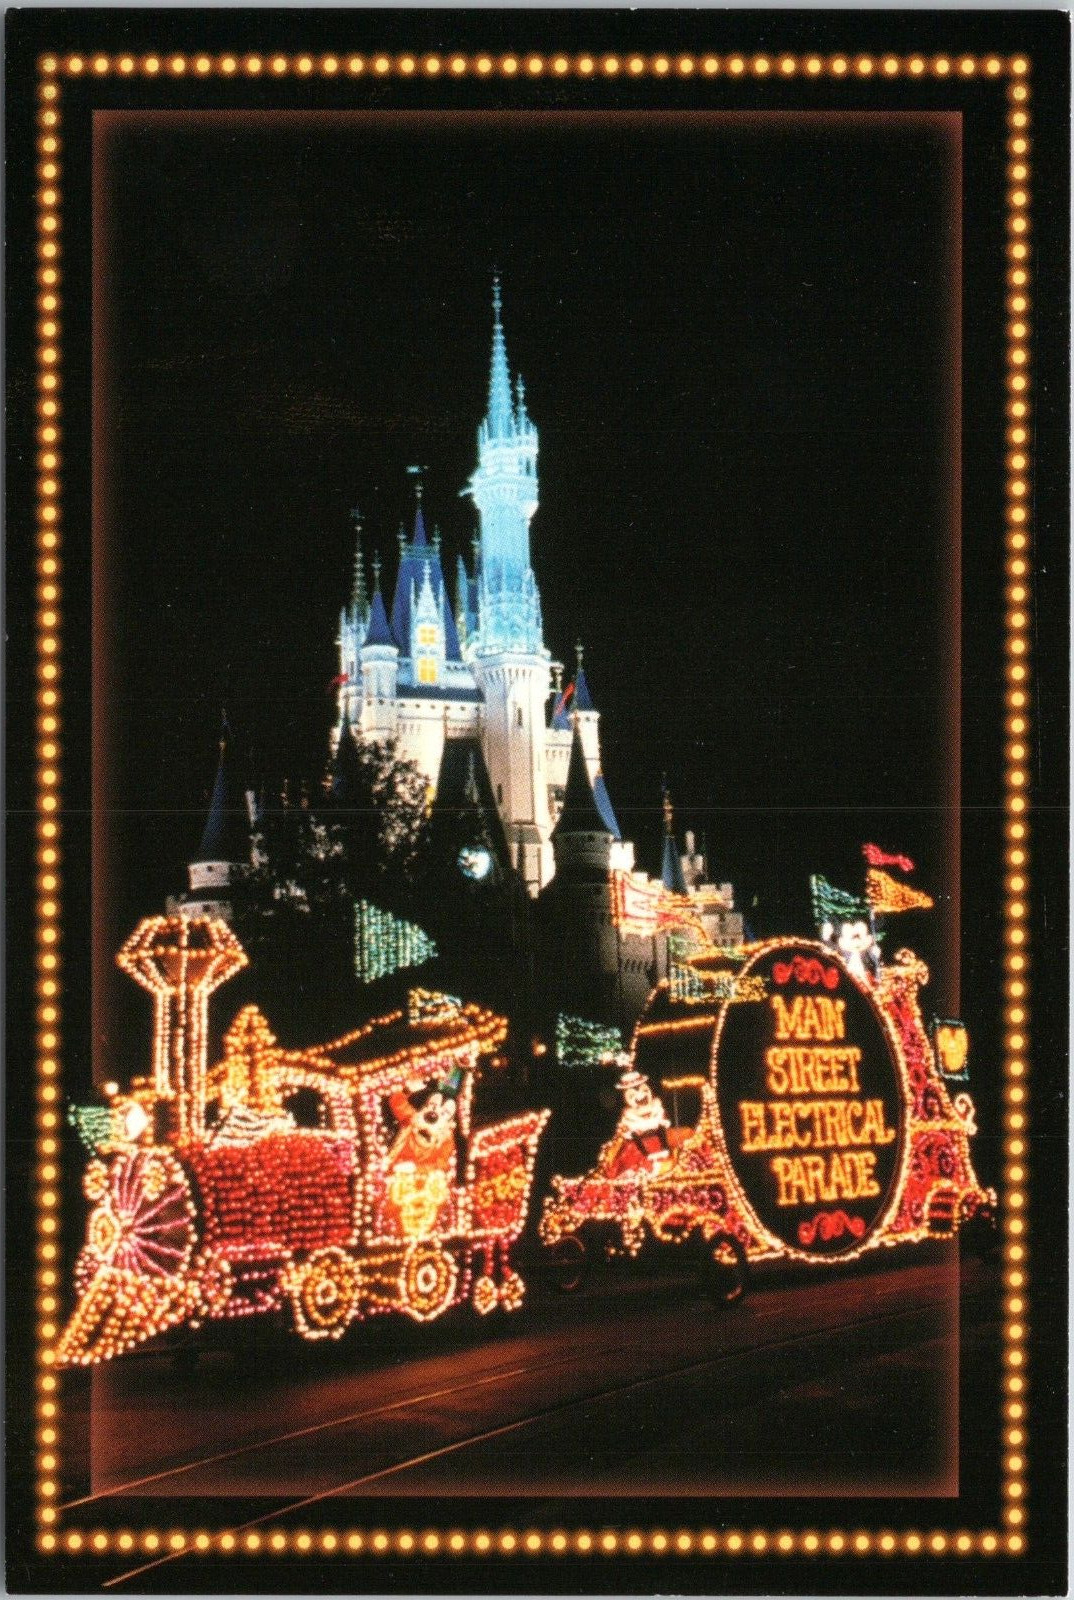 Disney World 4x6 Postcard - Main Street Electrical Parade - Orlando Florida 2000